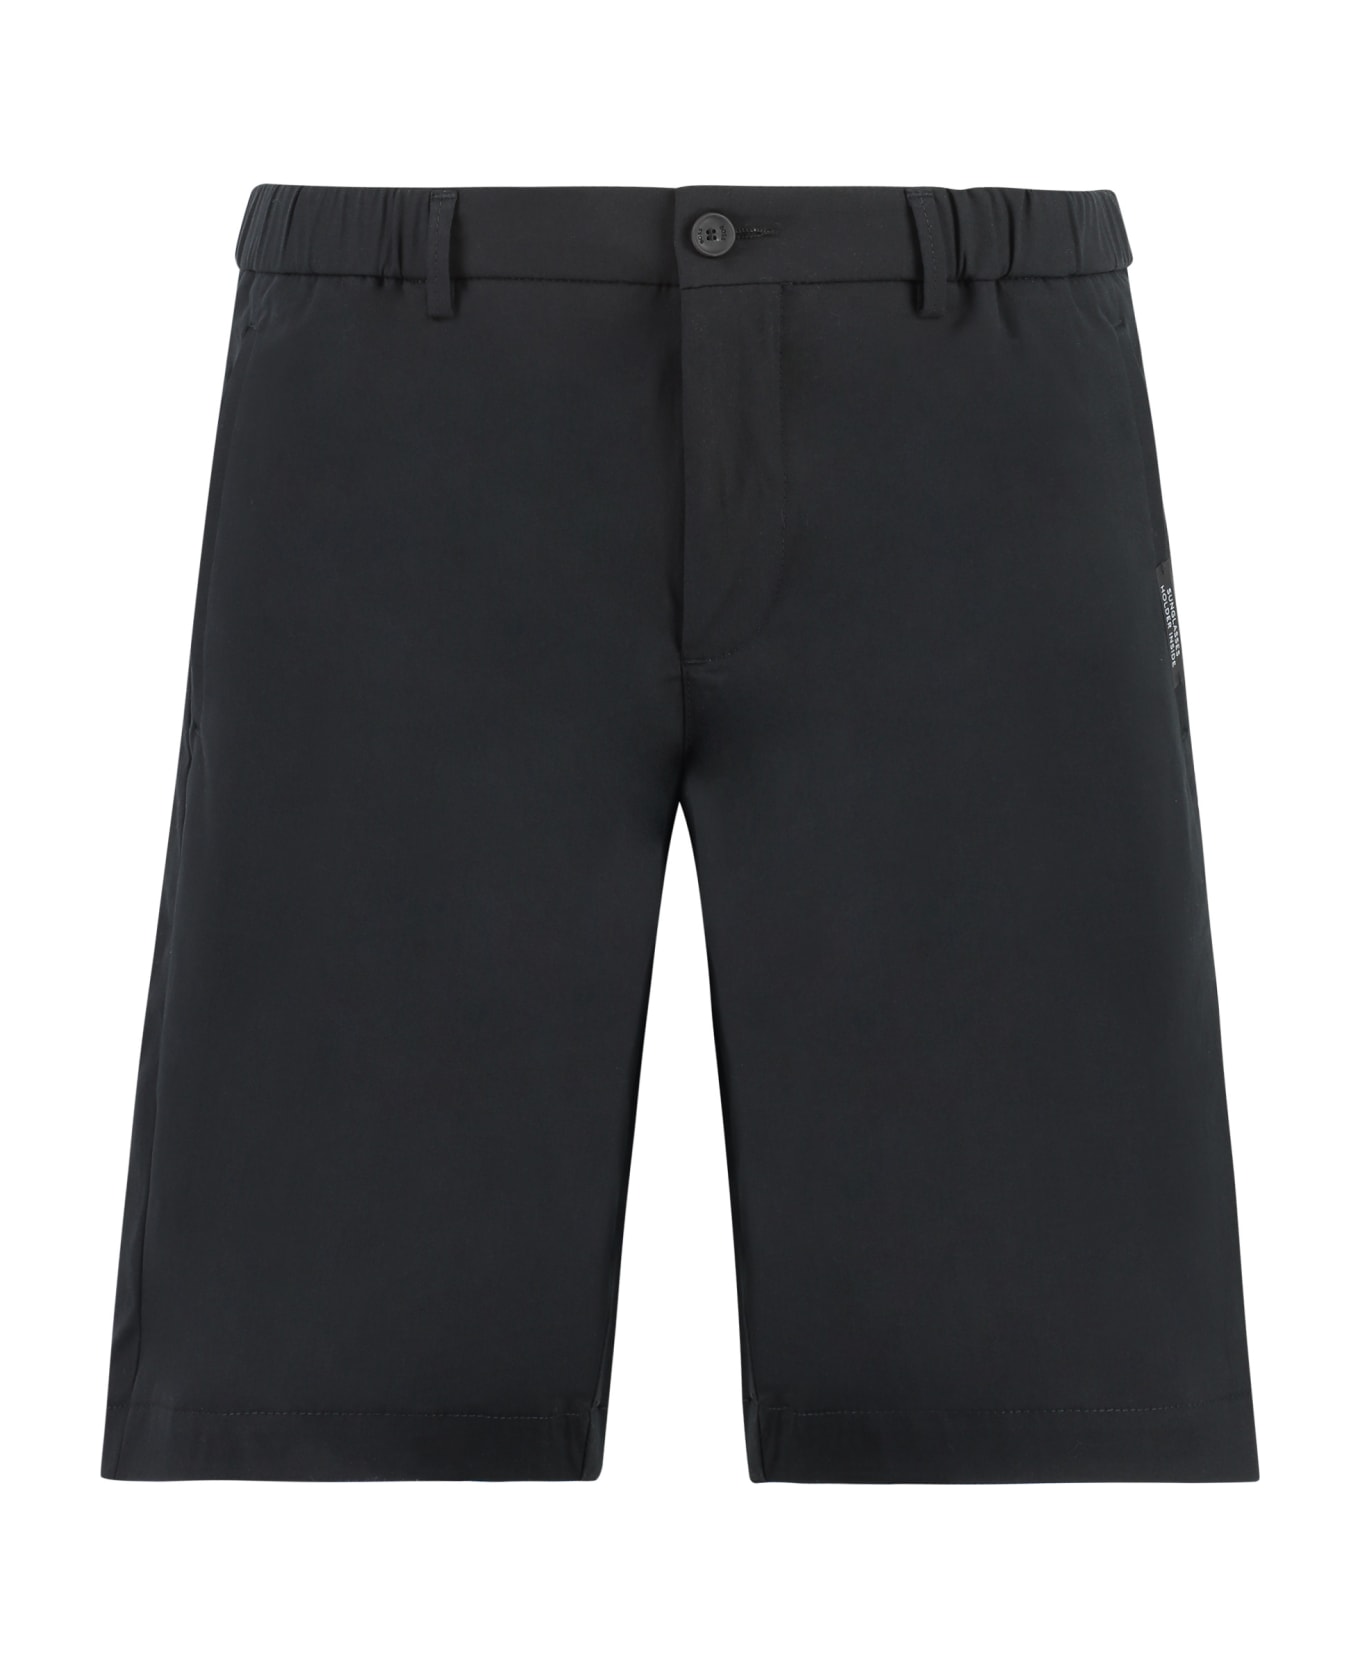 Hugo Boss Cotton Blend Bermuda Shorts - black